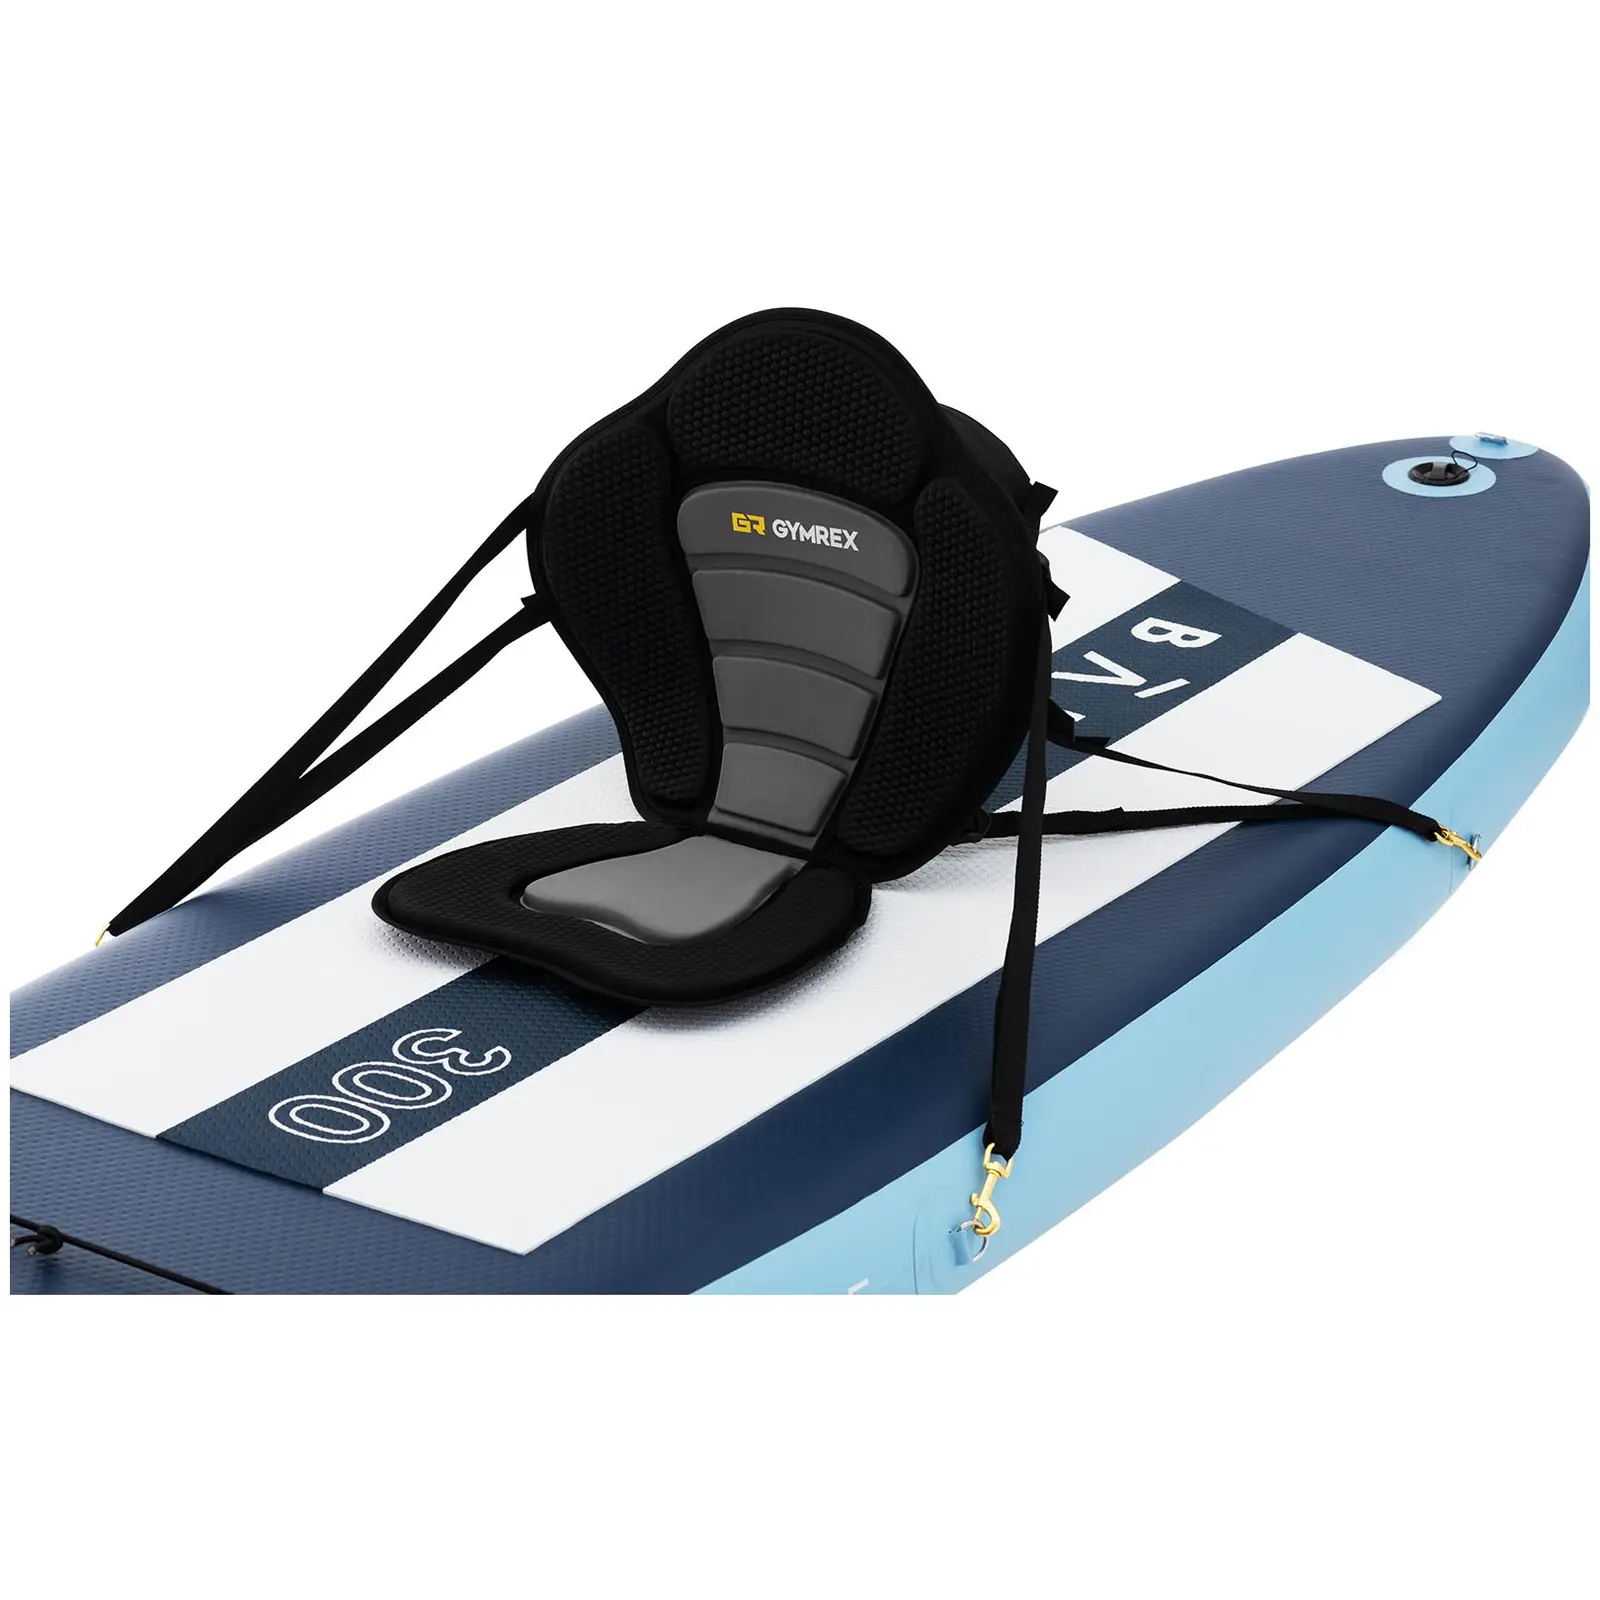 Sedačka na paddleboard - černá - 120 kg